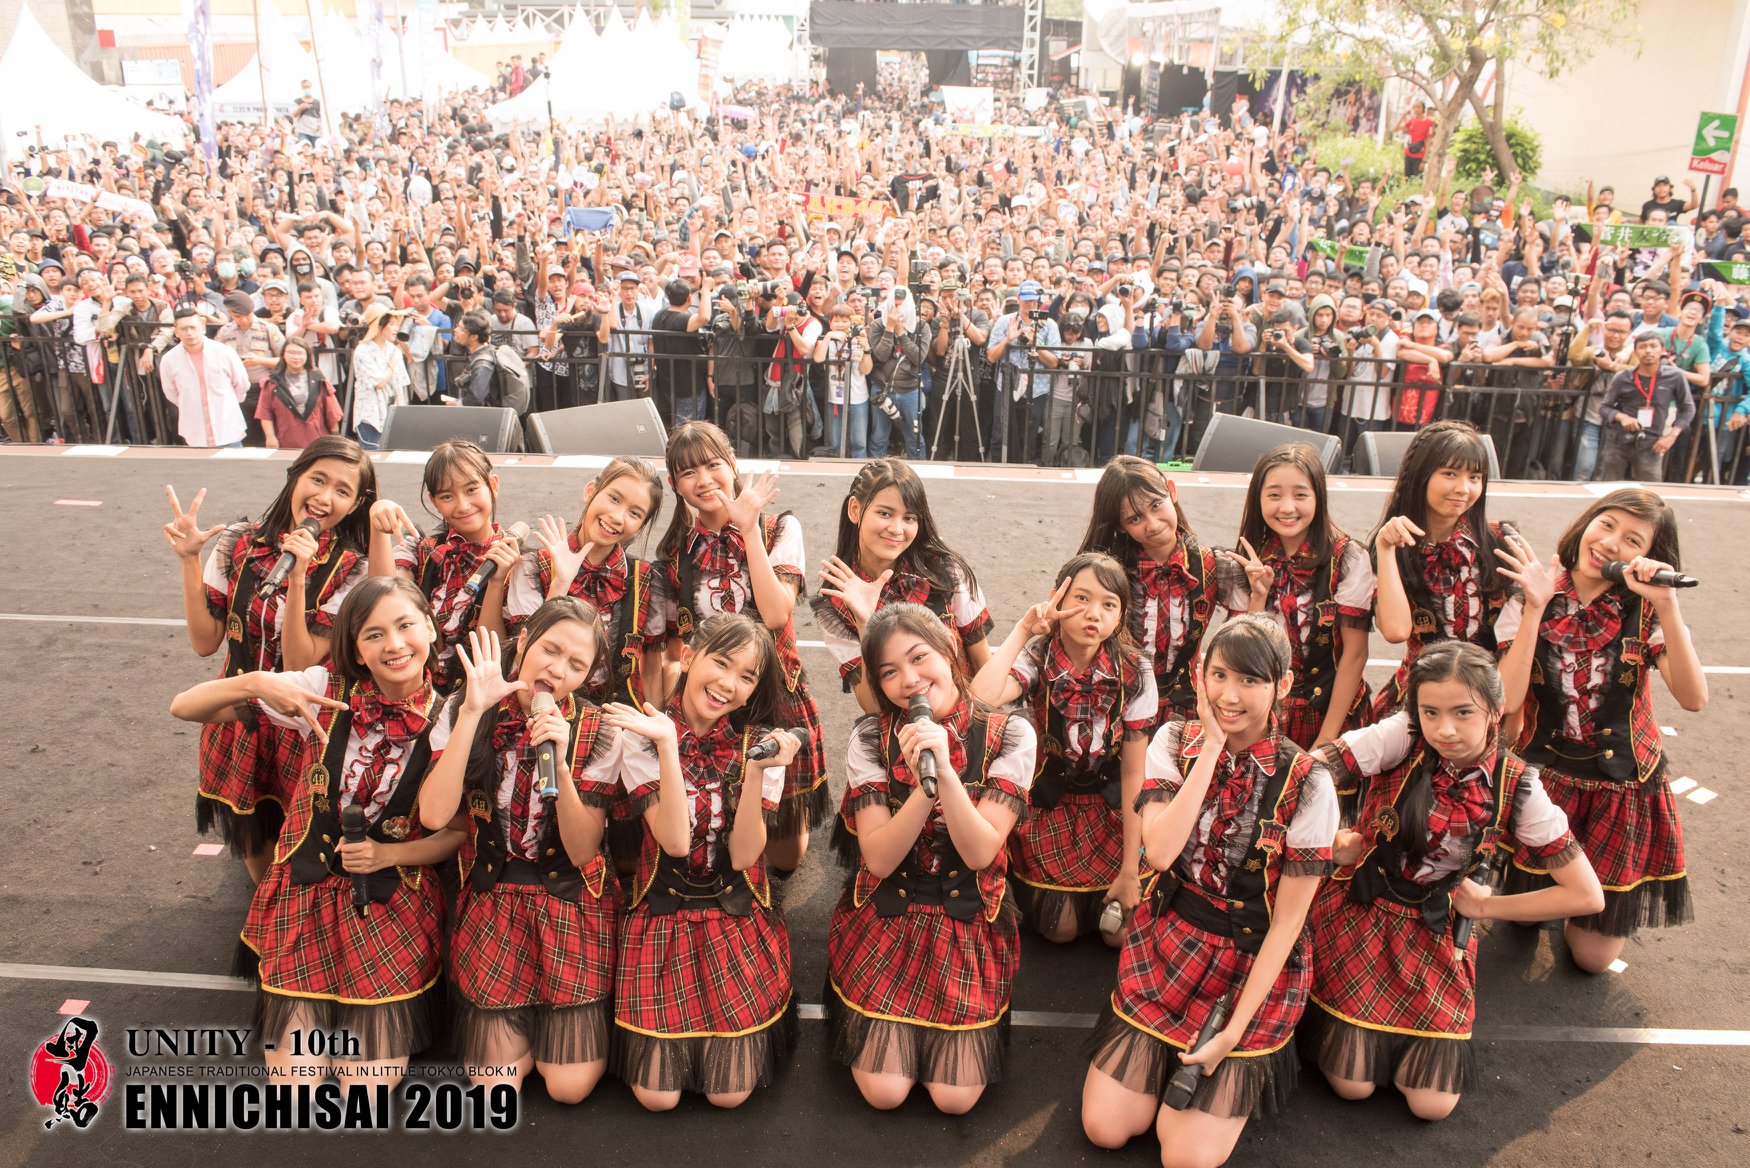 Serunya Ennichisai 2019, Festival Budaya Jepang Terbesar di Indonesia!